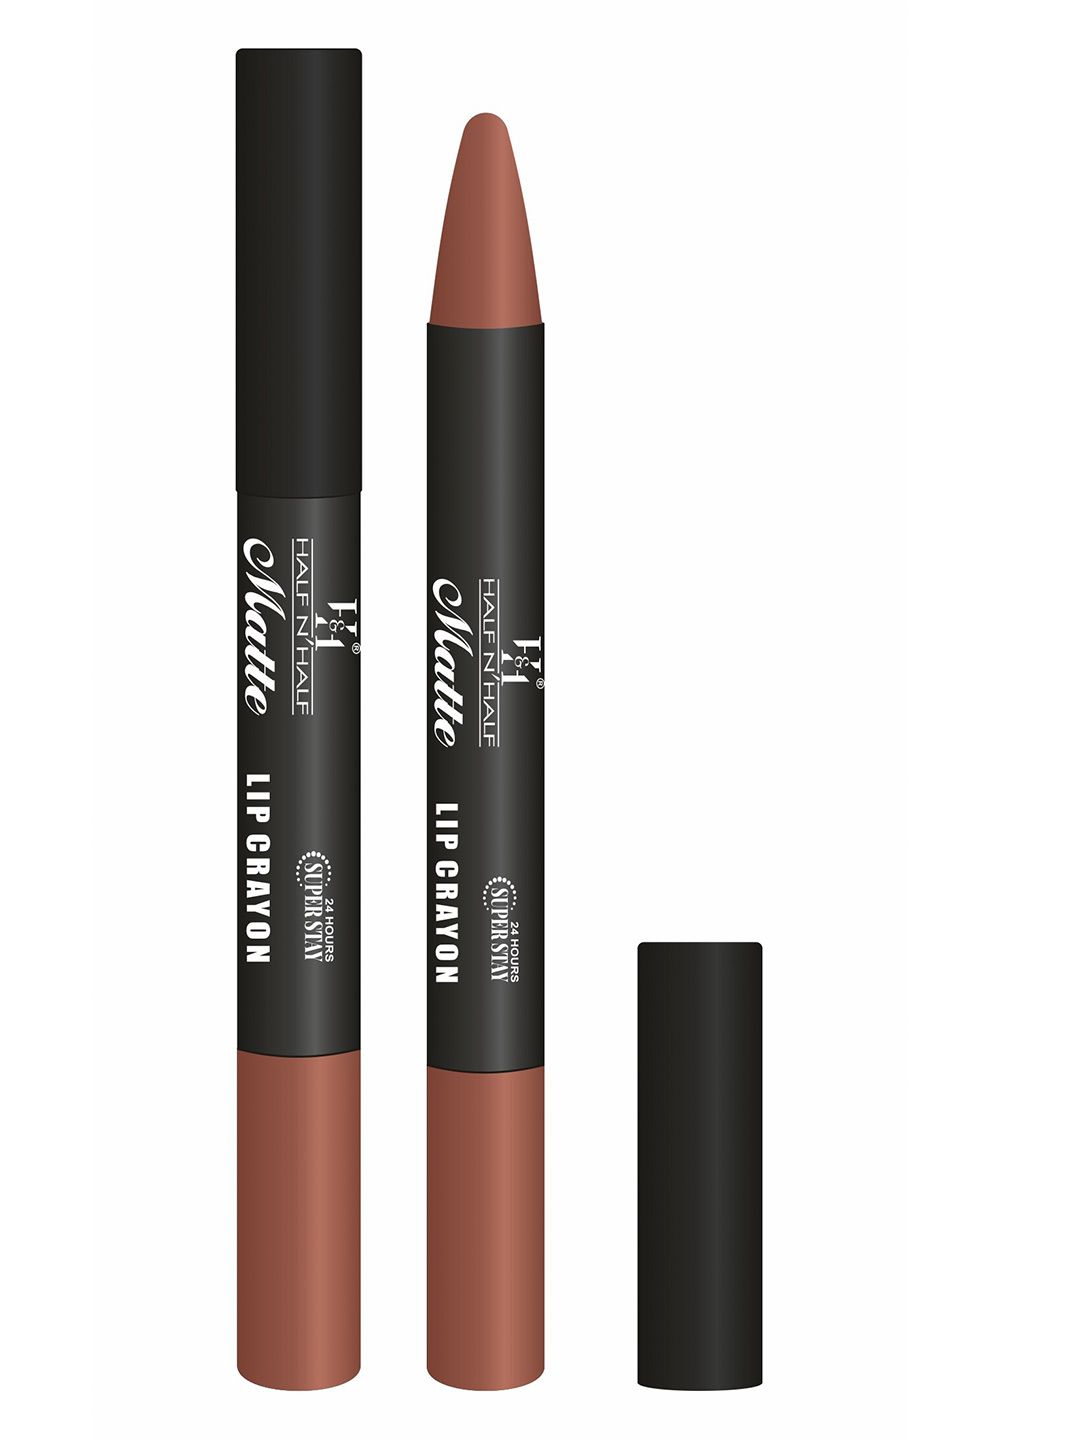 Half N Half Matte Velvet Soft 24h Super Stay Lip Crayon - Hot Chocolate 06 Price in India